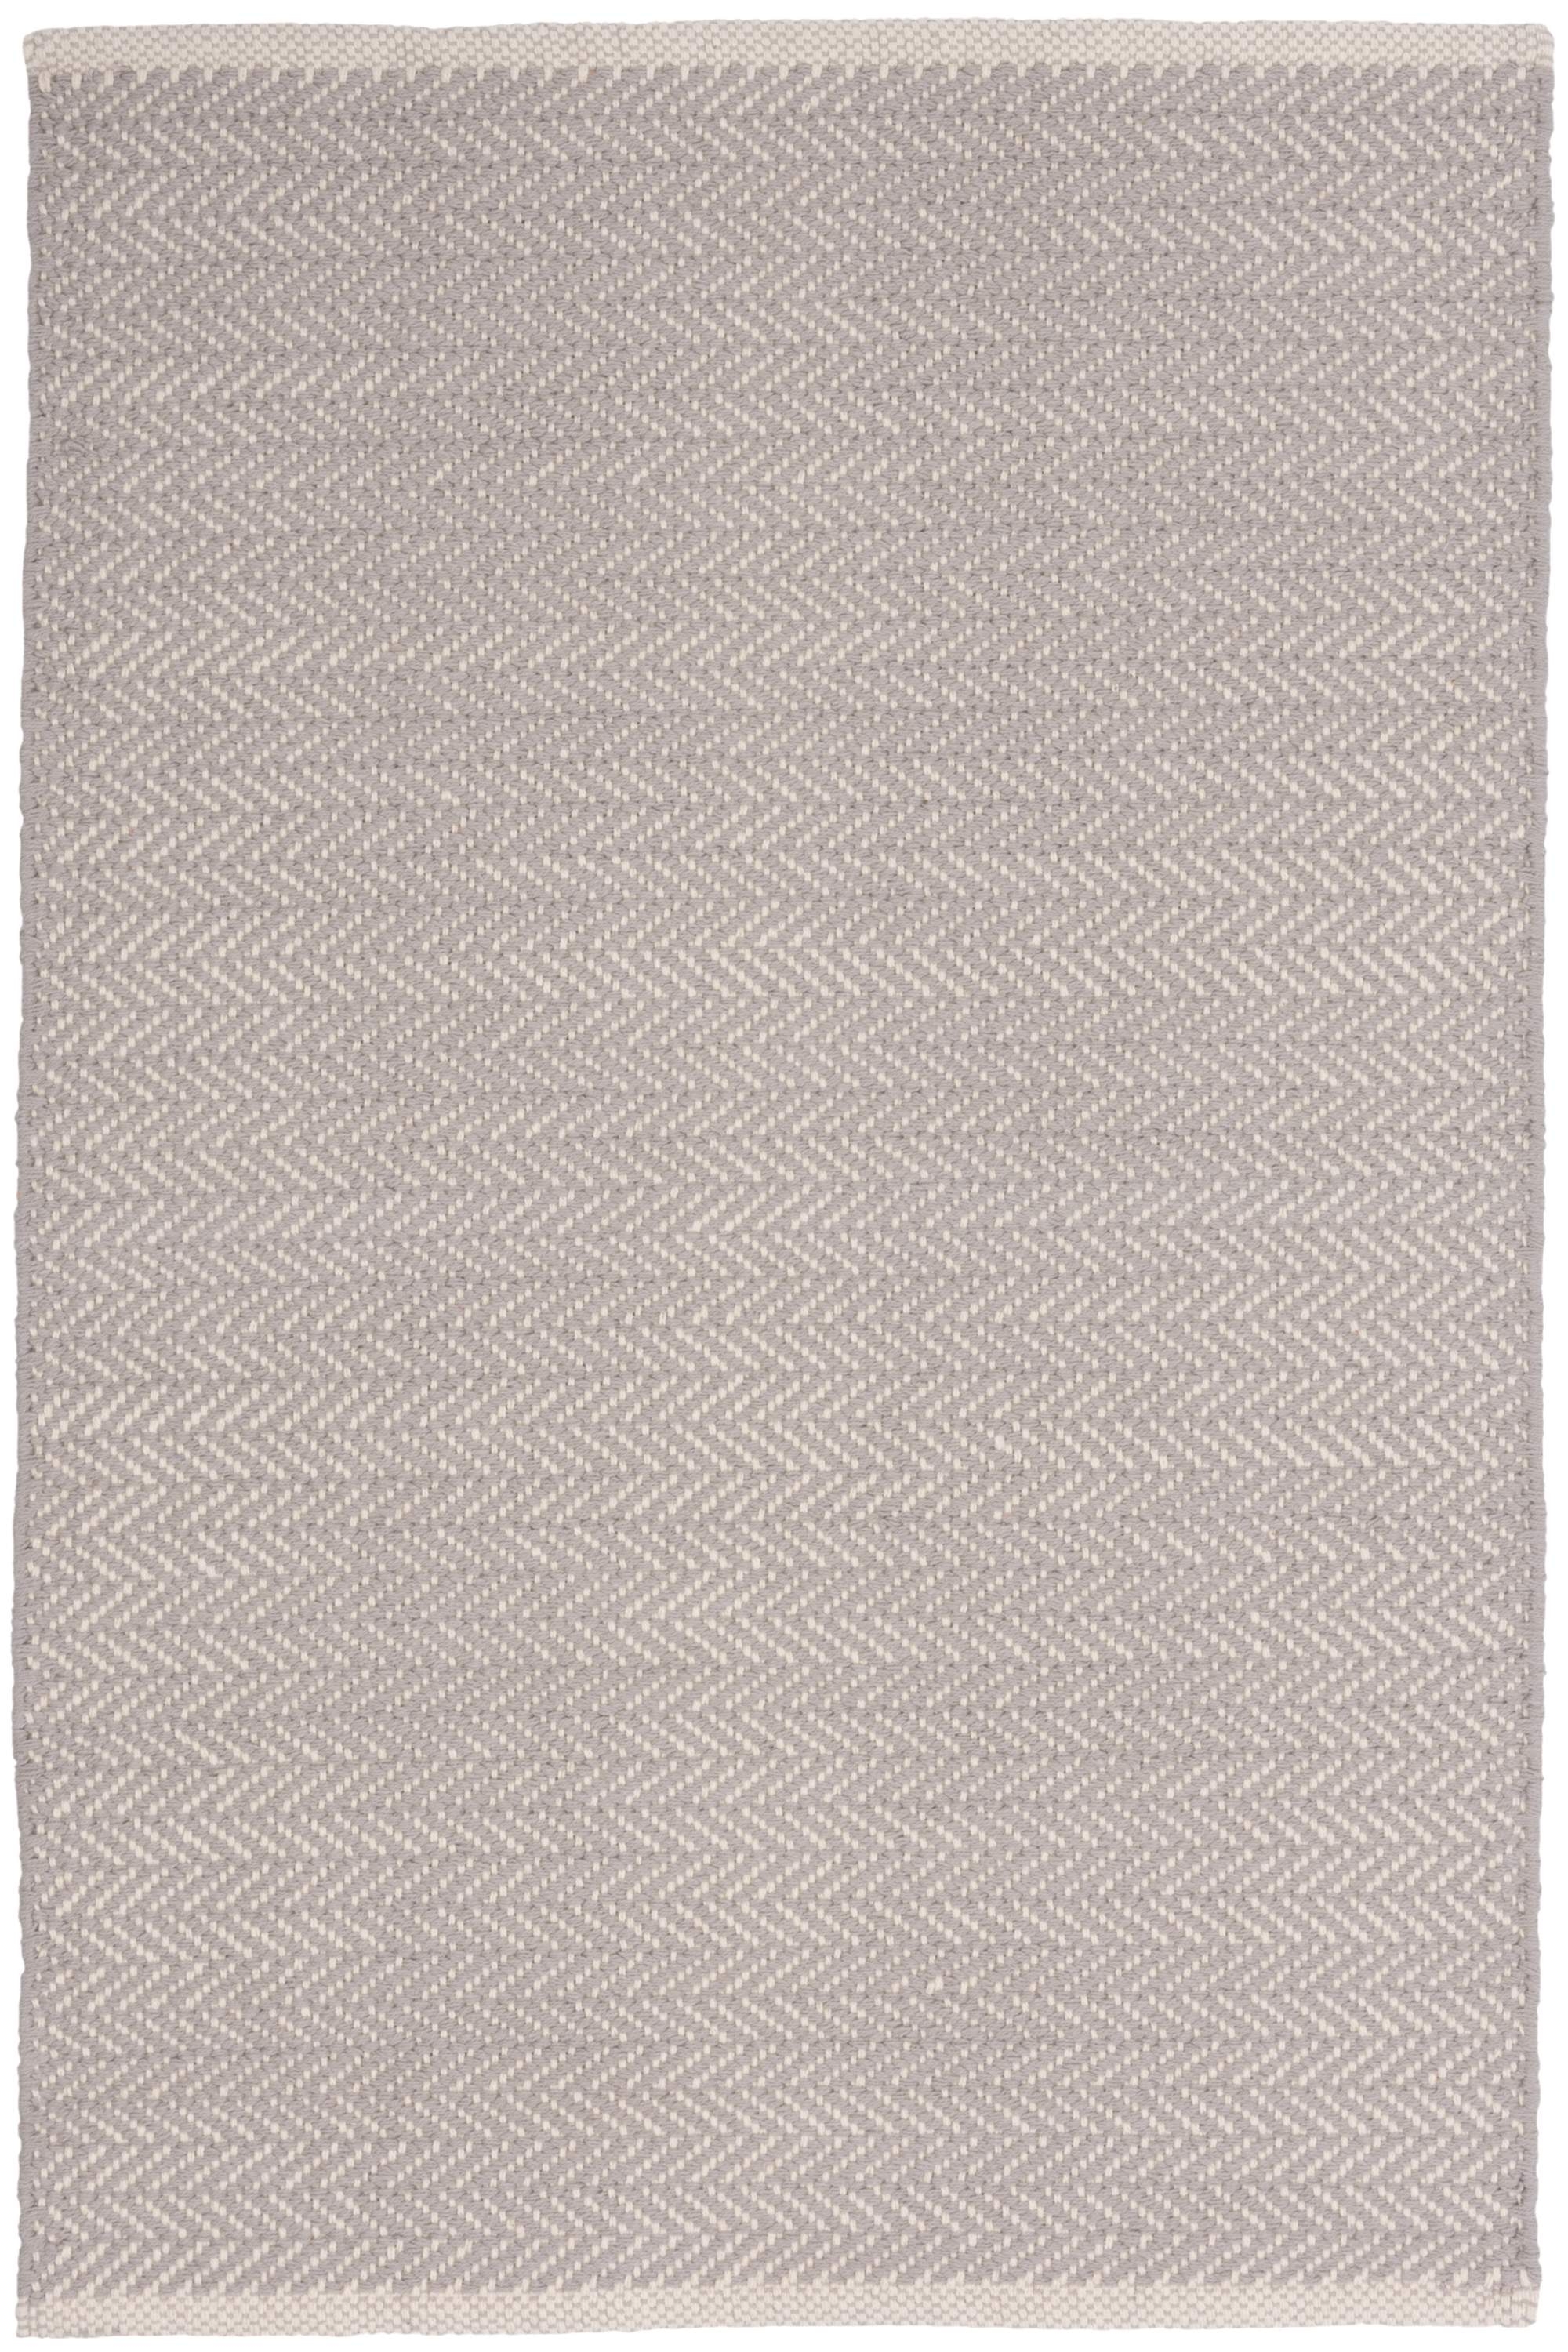 Herringbone Dove Grey Woven Cotton Rug - Image 0